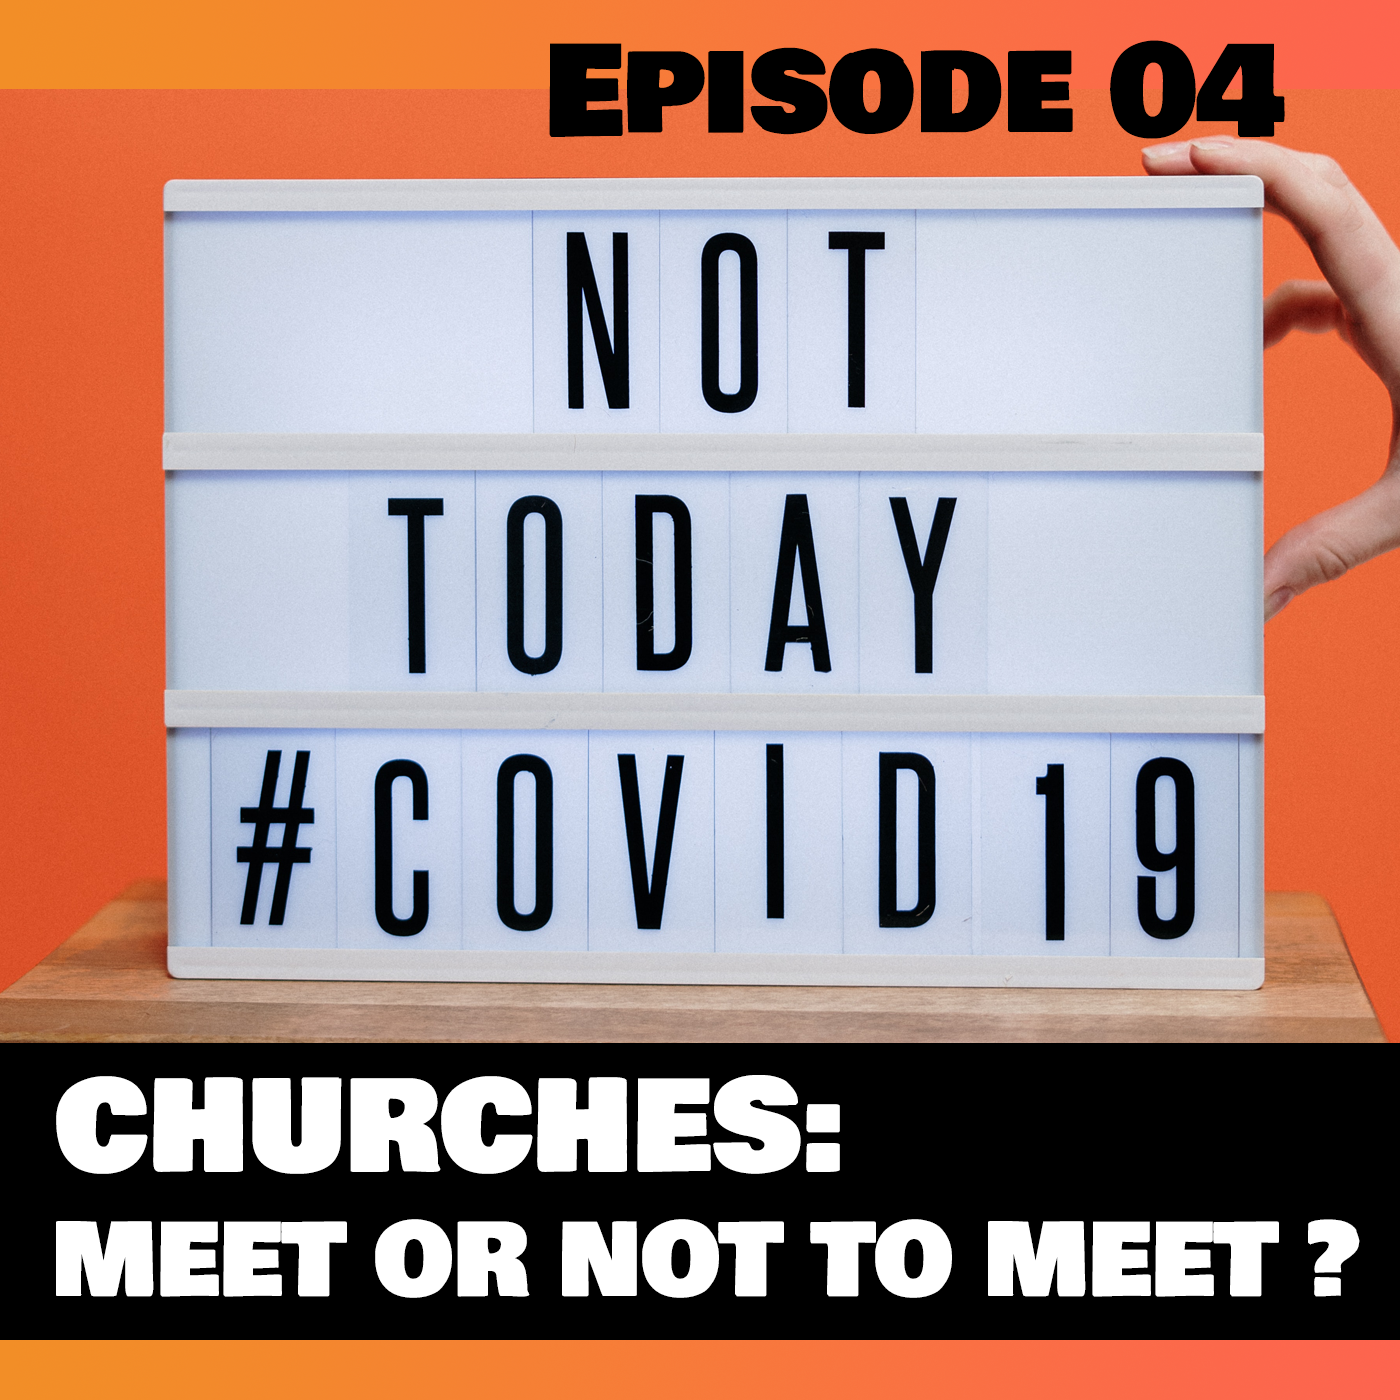 Churches: Meet or Not to Meet?